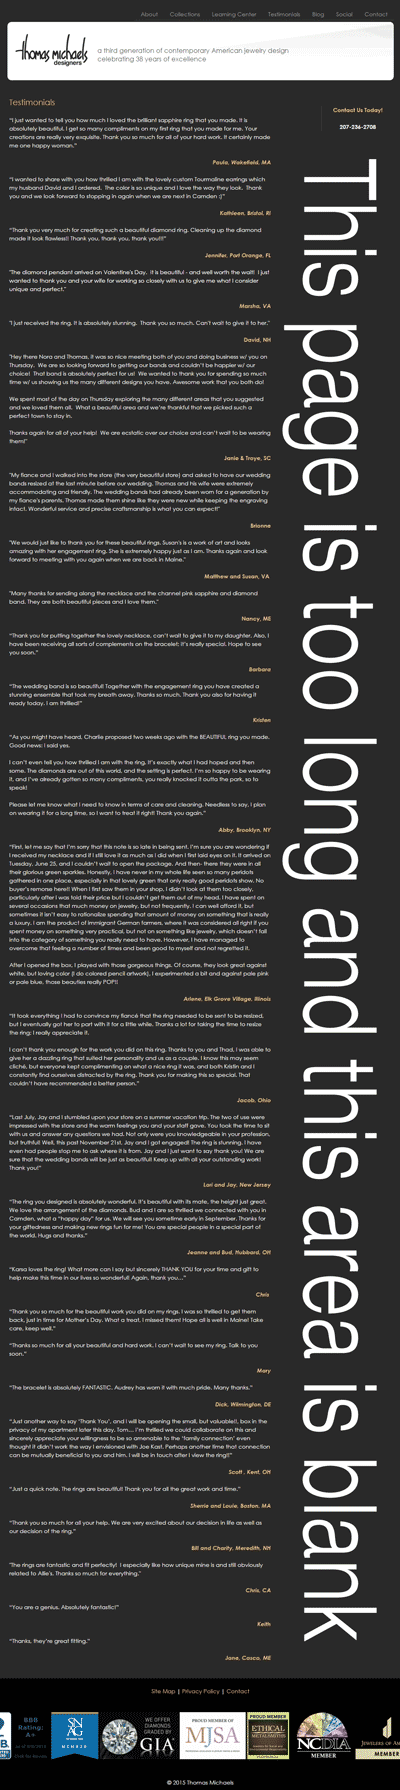 Thomas Michaels Designers Website Review 1340-testimonial-page-10